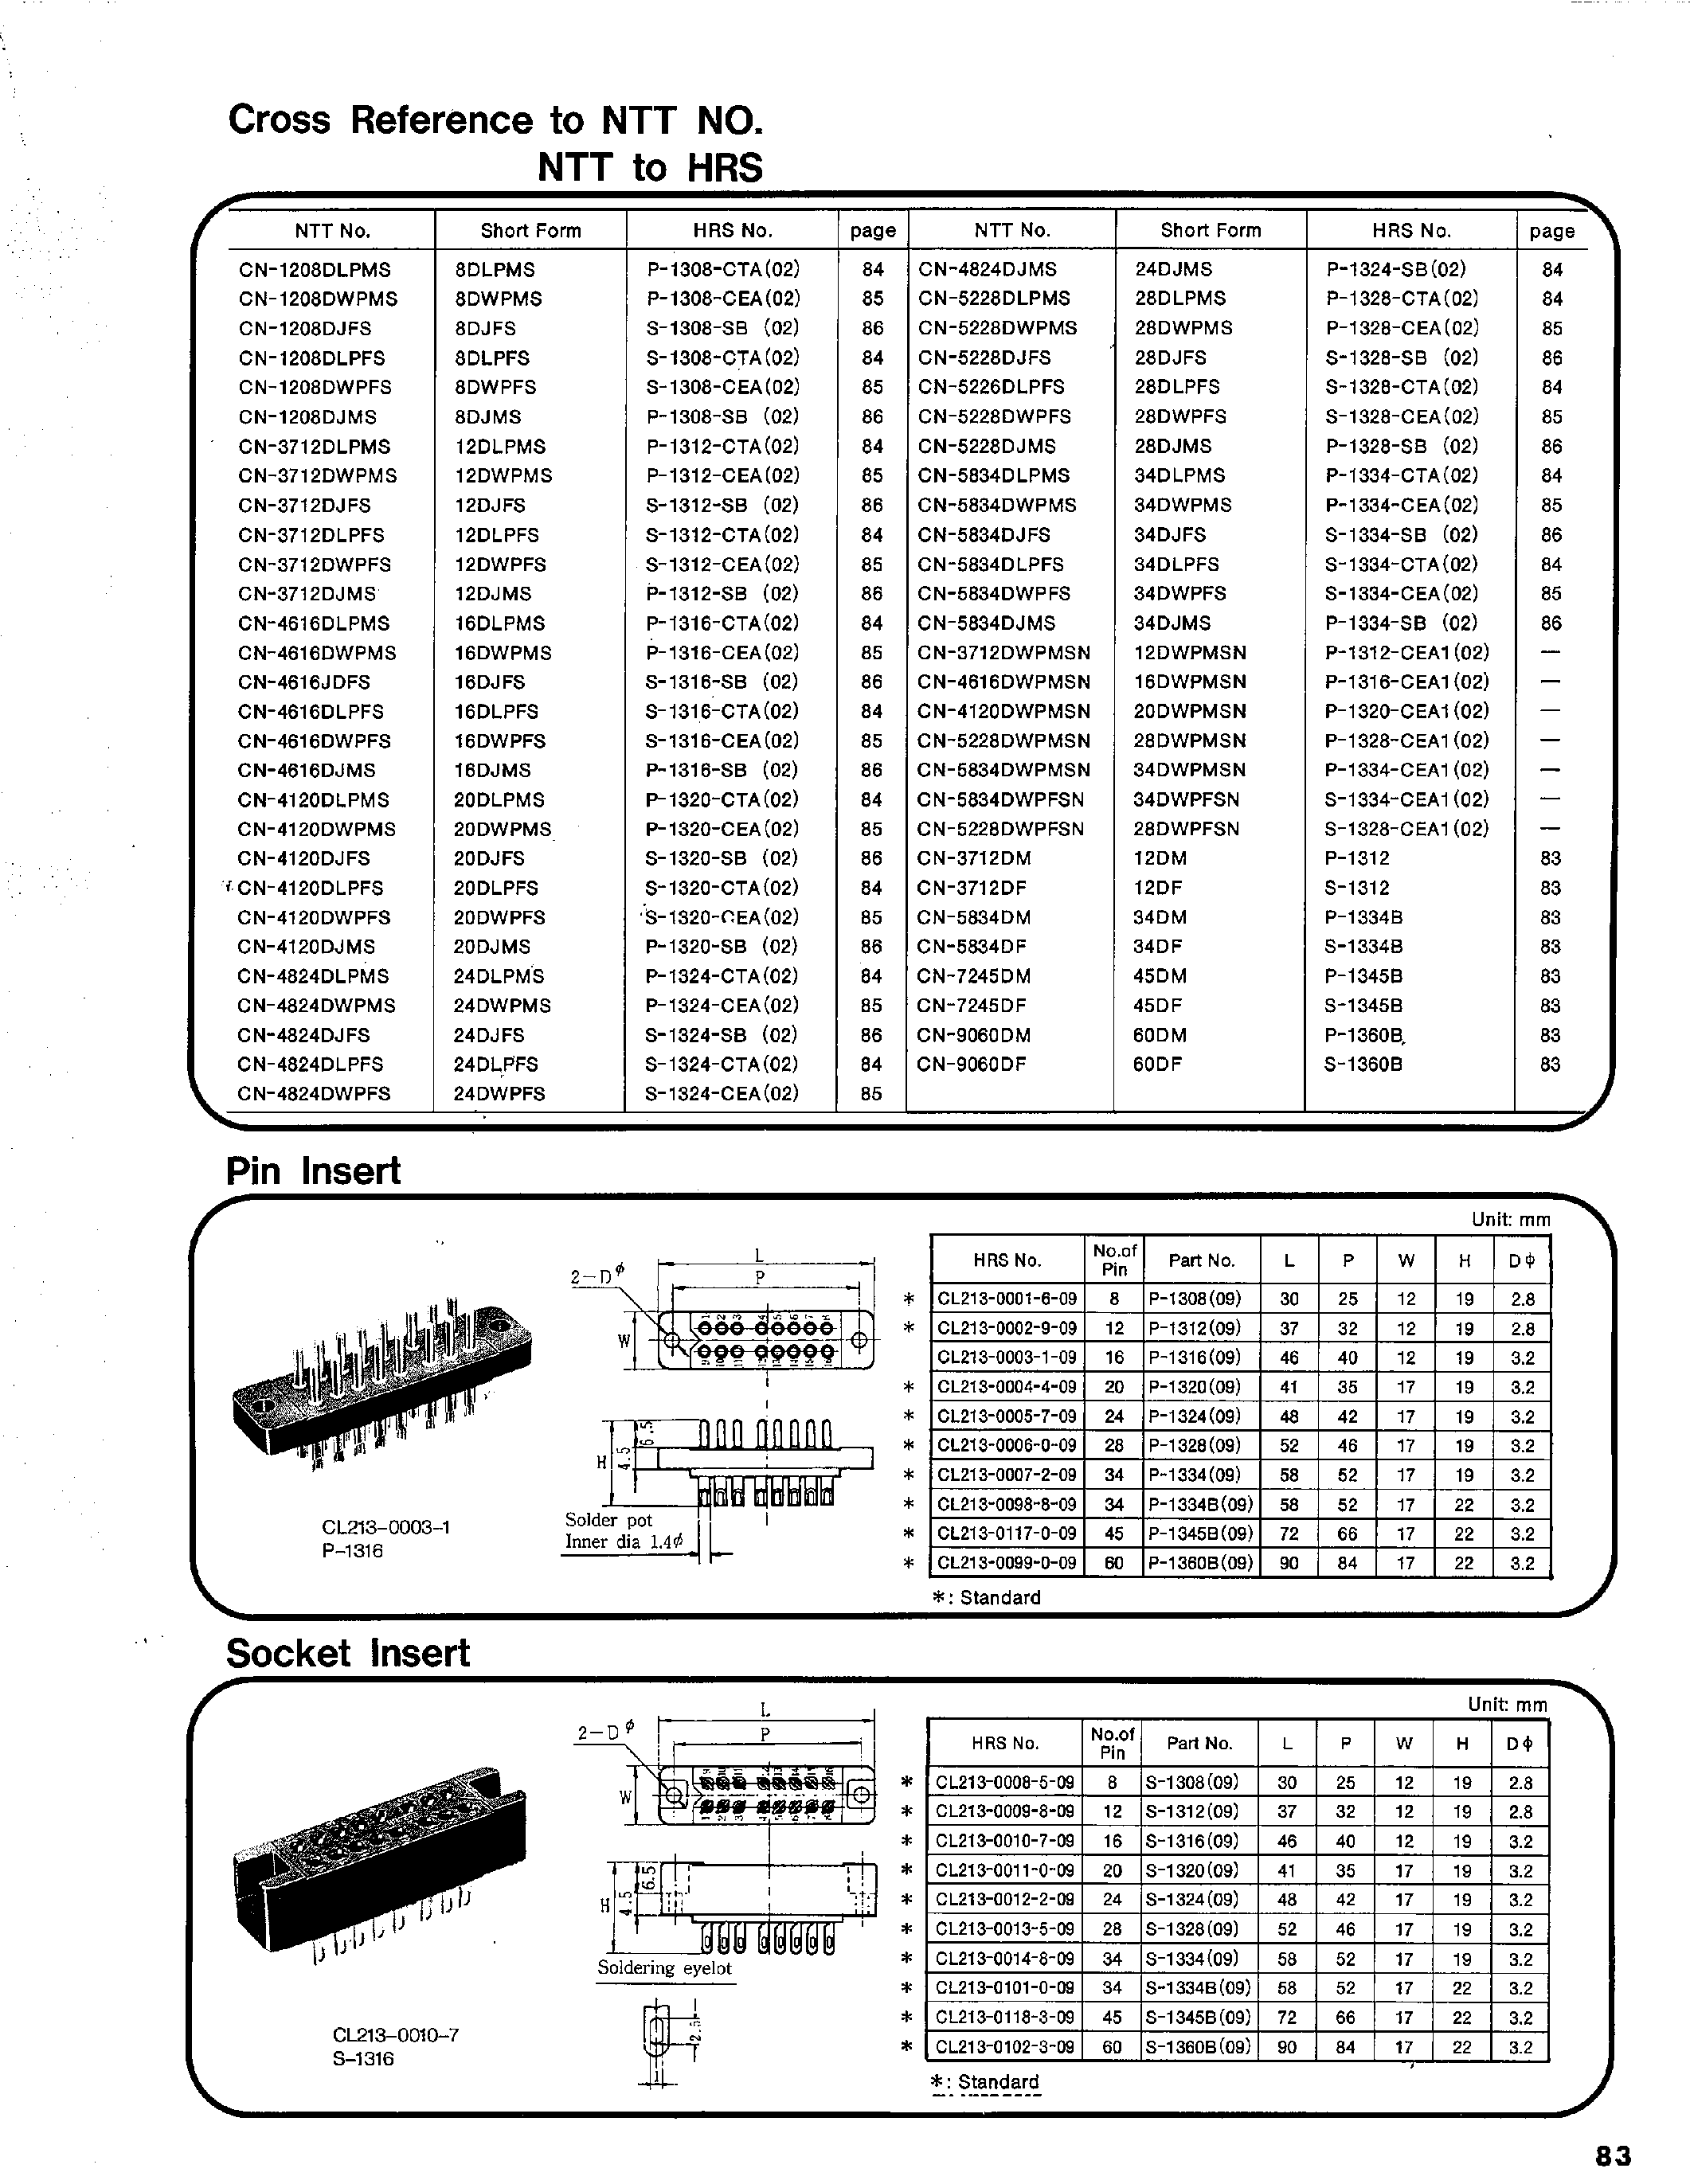 Datasheet P-1328-CE - 1300 SERIES RECTANGULAR CONNECTORS page 2